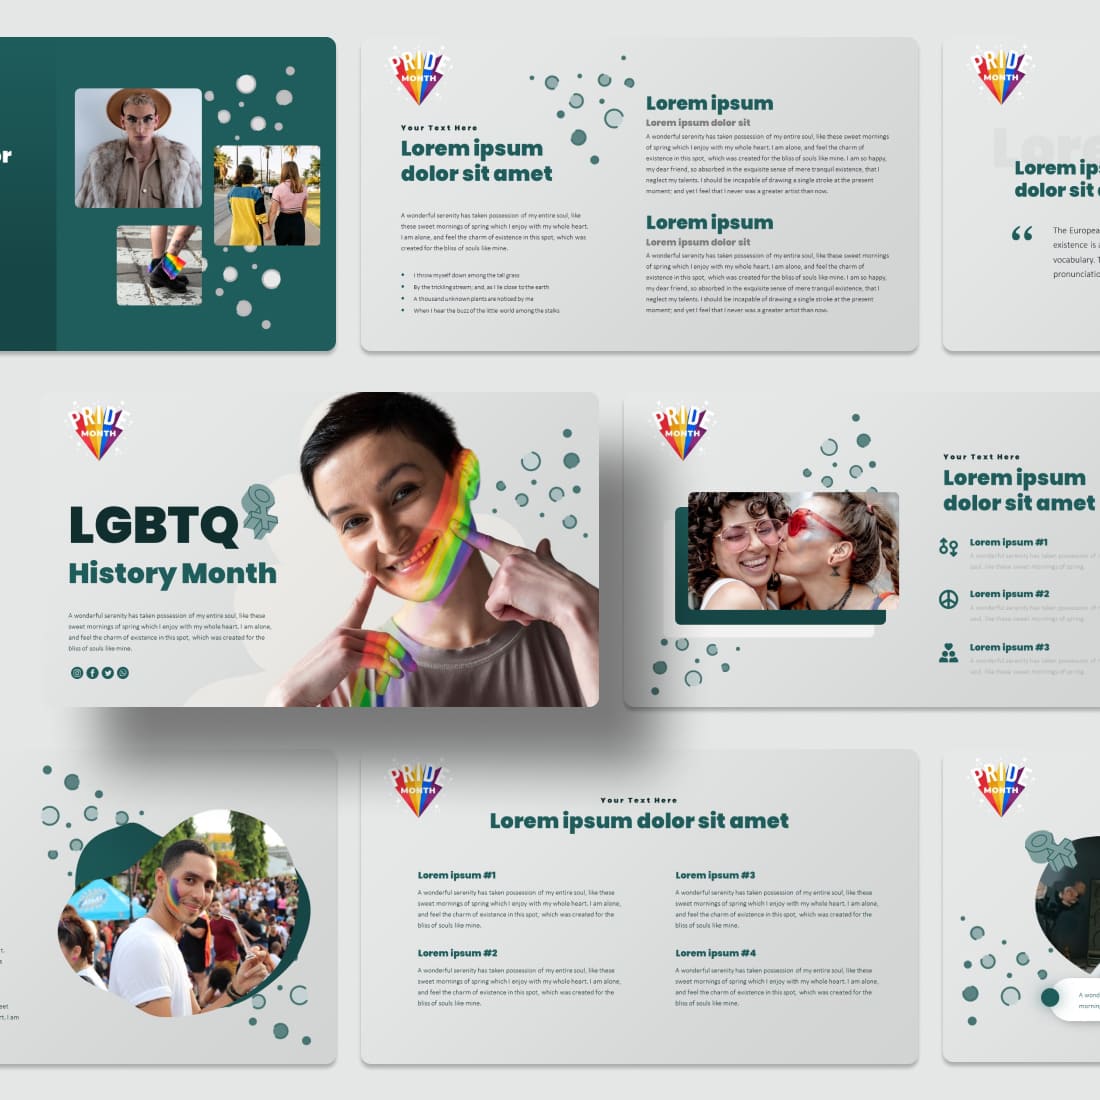 LGBTQ History Month Google Slides Theme cover.